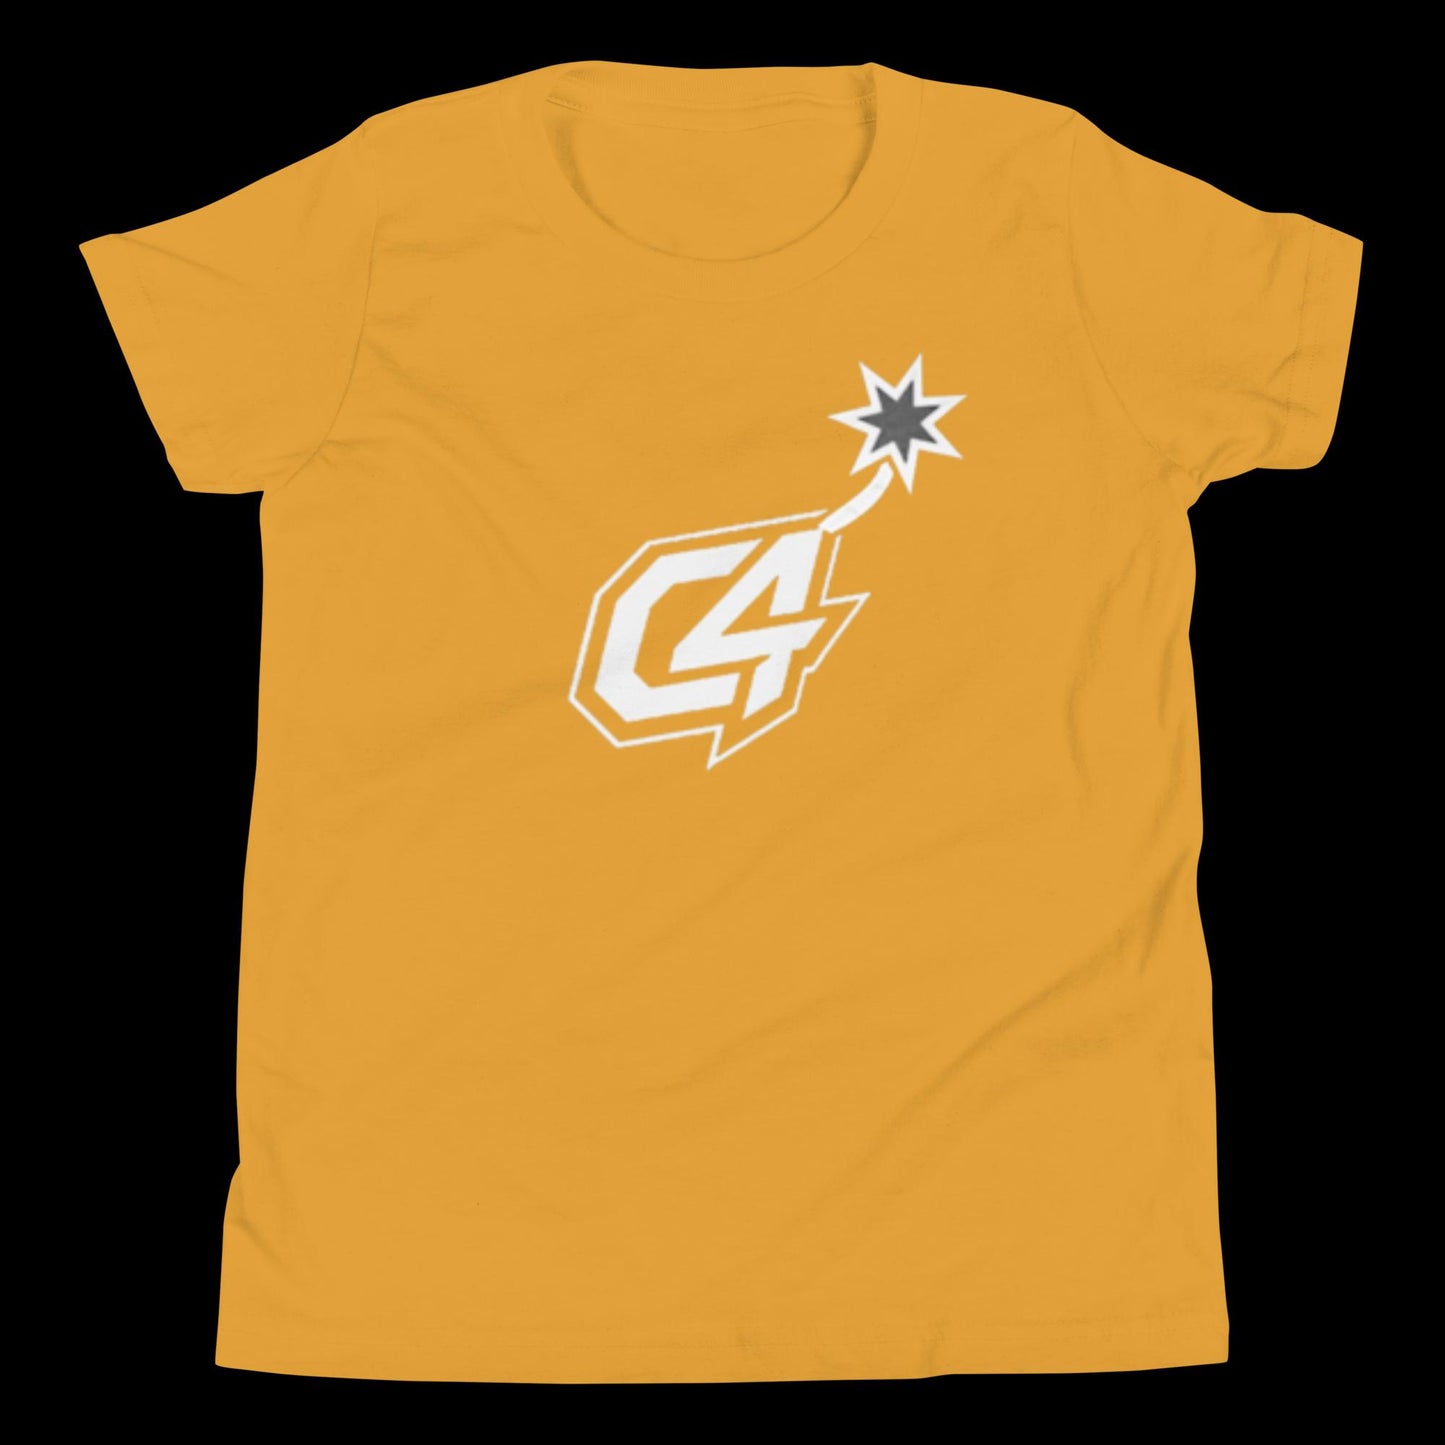 Carmelo Brown "C4" VOL 1 (LOGO)Youth Short Sleeve T-Shirt